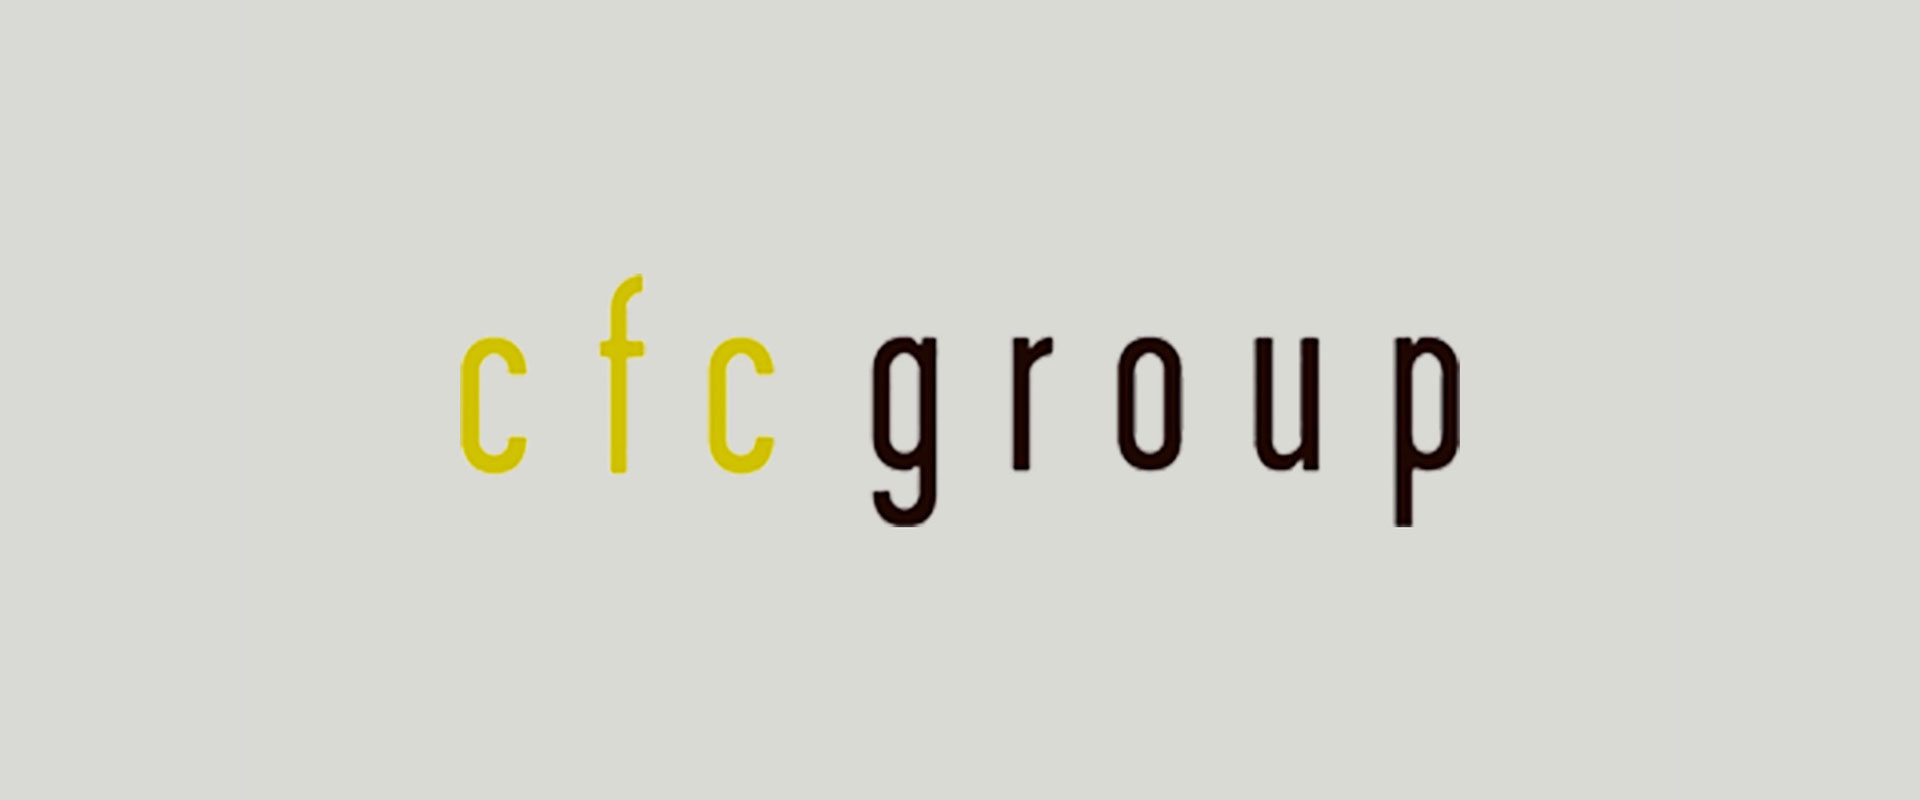 <h1>New Representative: CFC Group</h1>